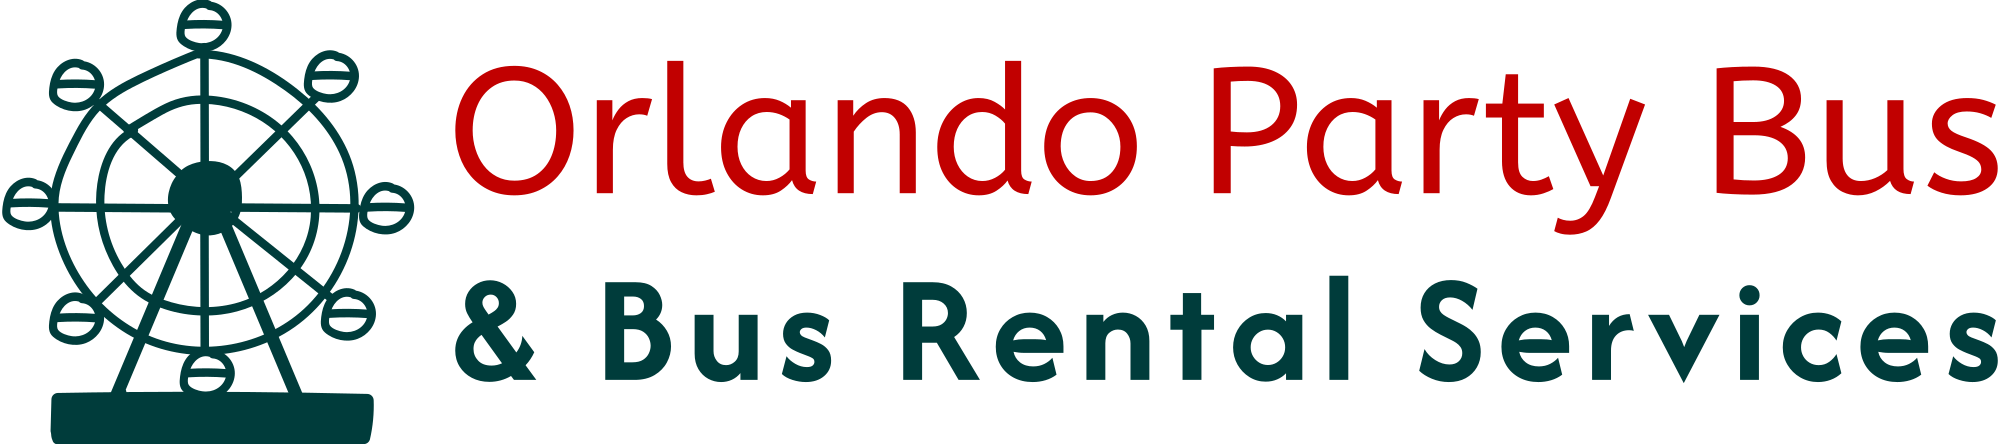 Orlando Party Bus Company logo